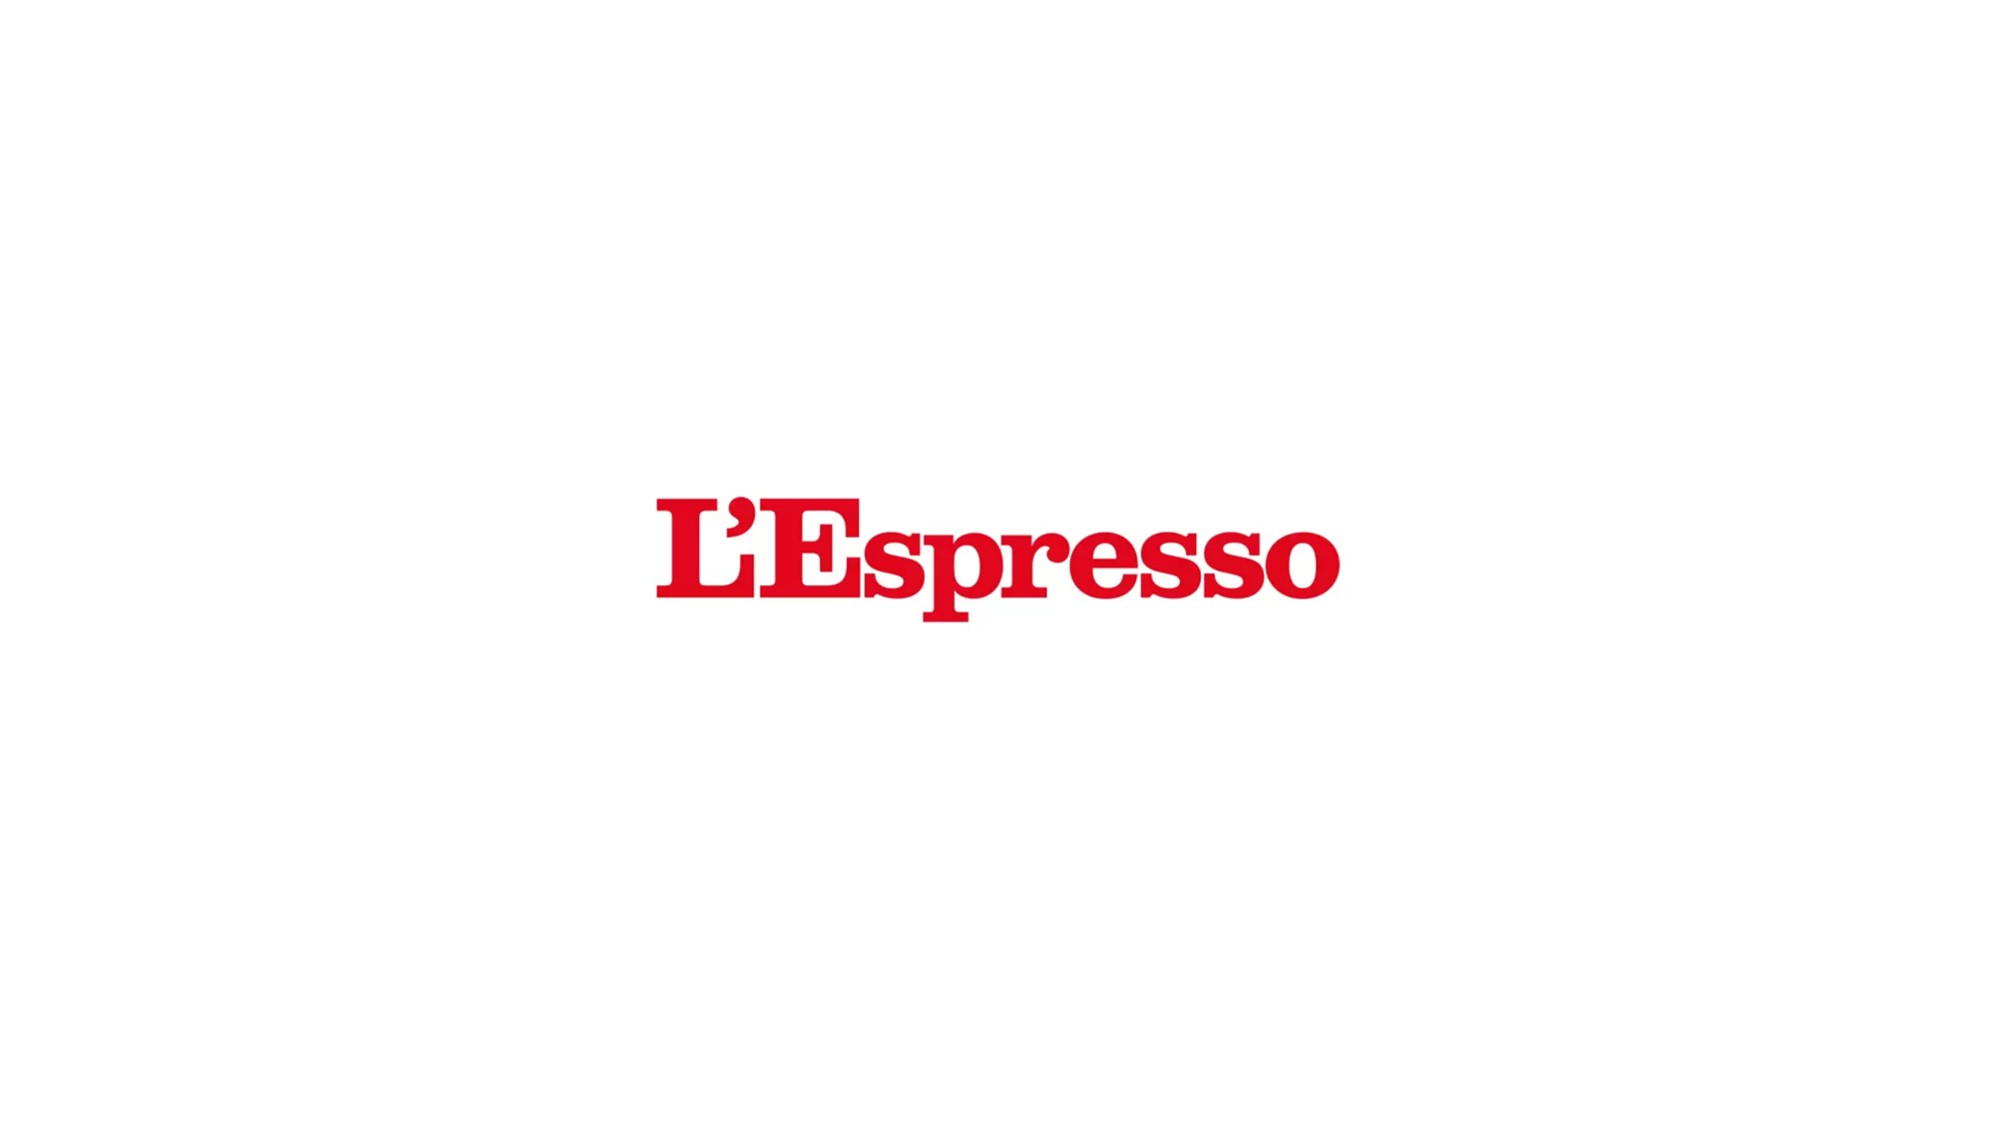 Interview with L'Espresso